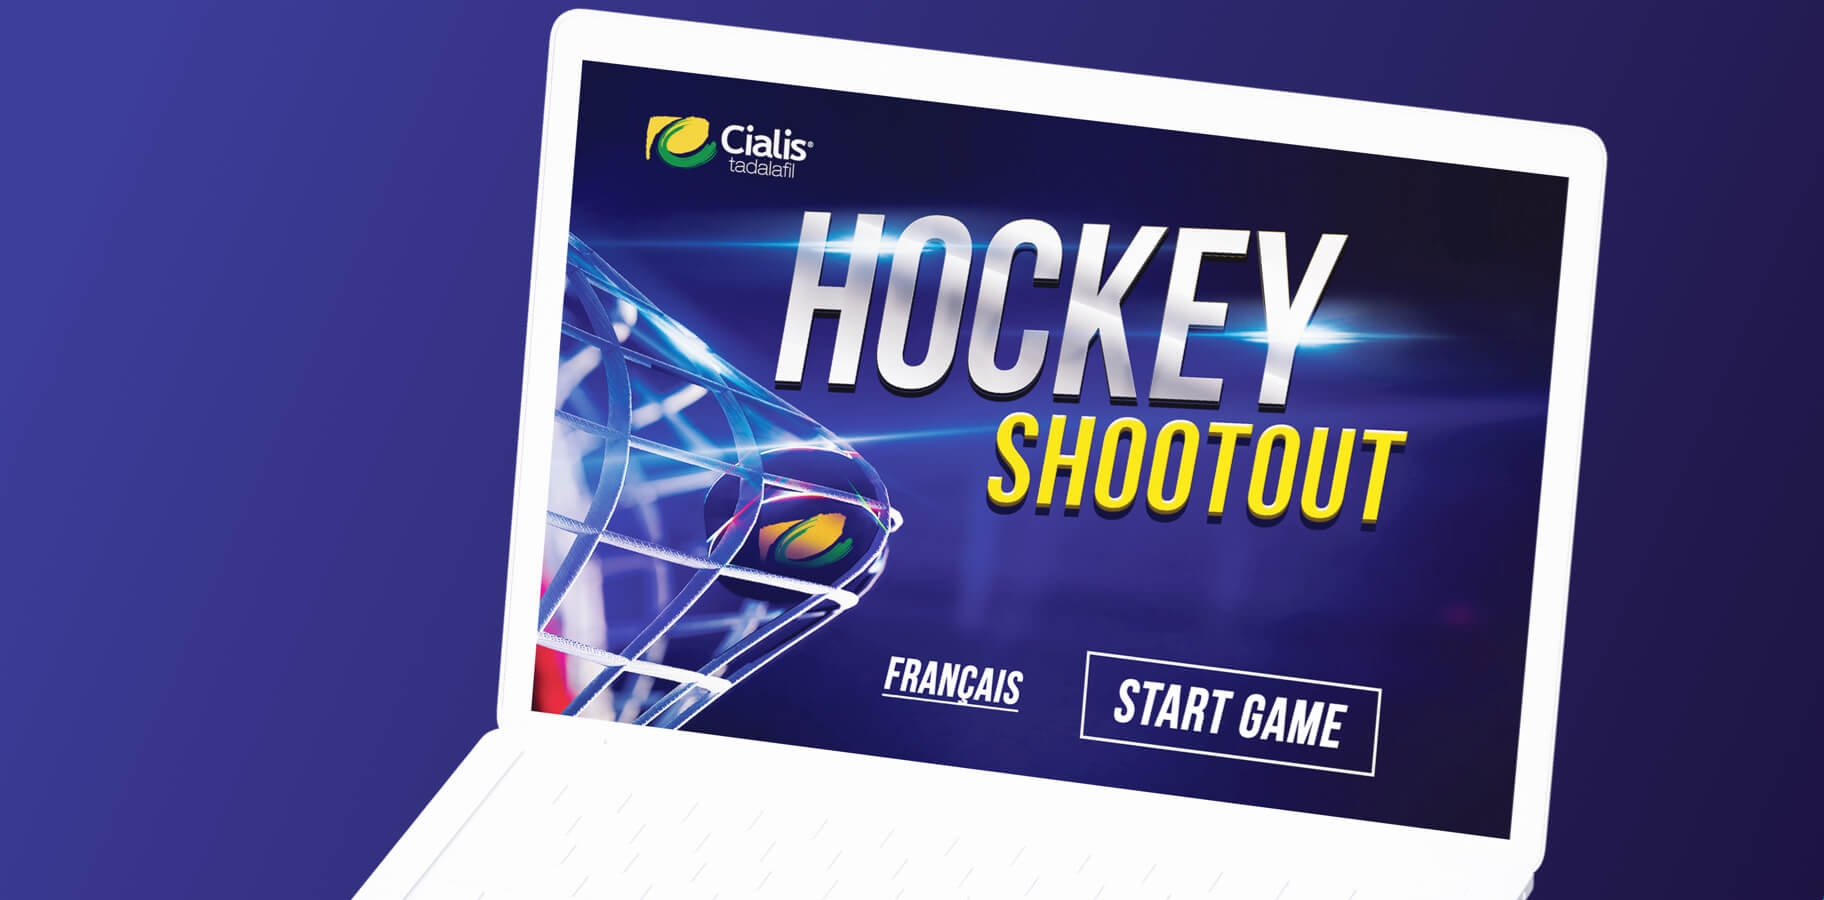 Hockey shootout game that Elite Digital developed for Cialis on desktop.